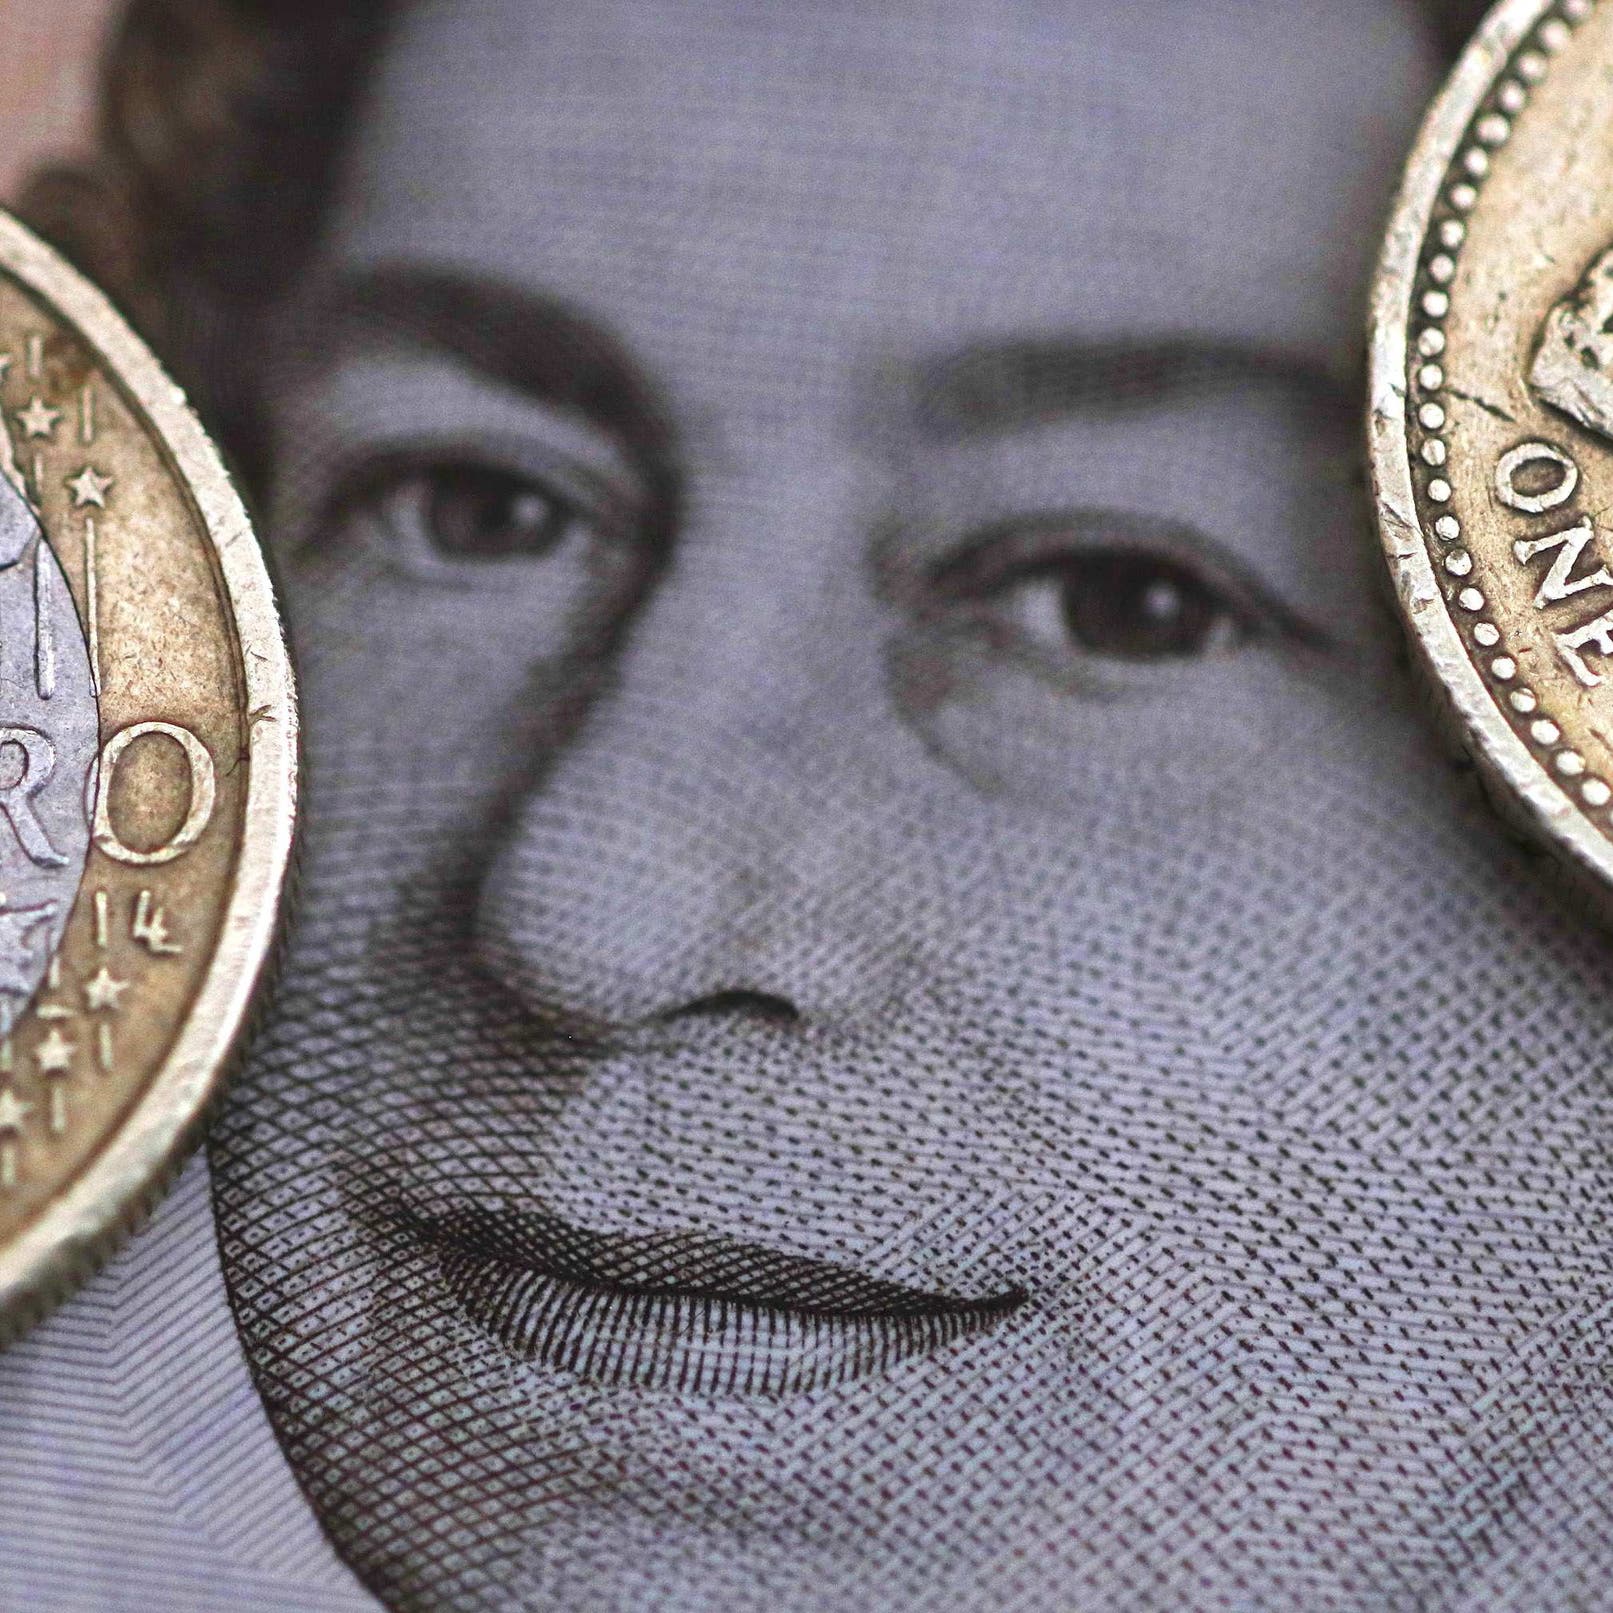 Collectors scramble for rare Queen Elizabeth coins and notes 